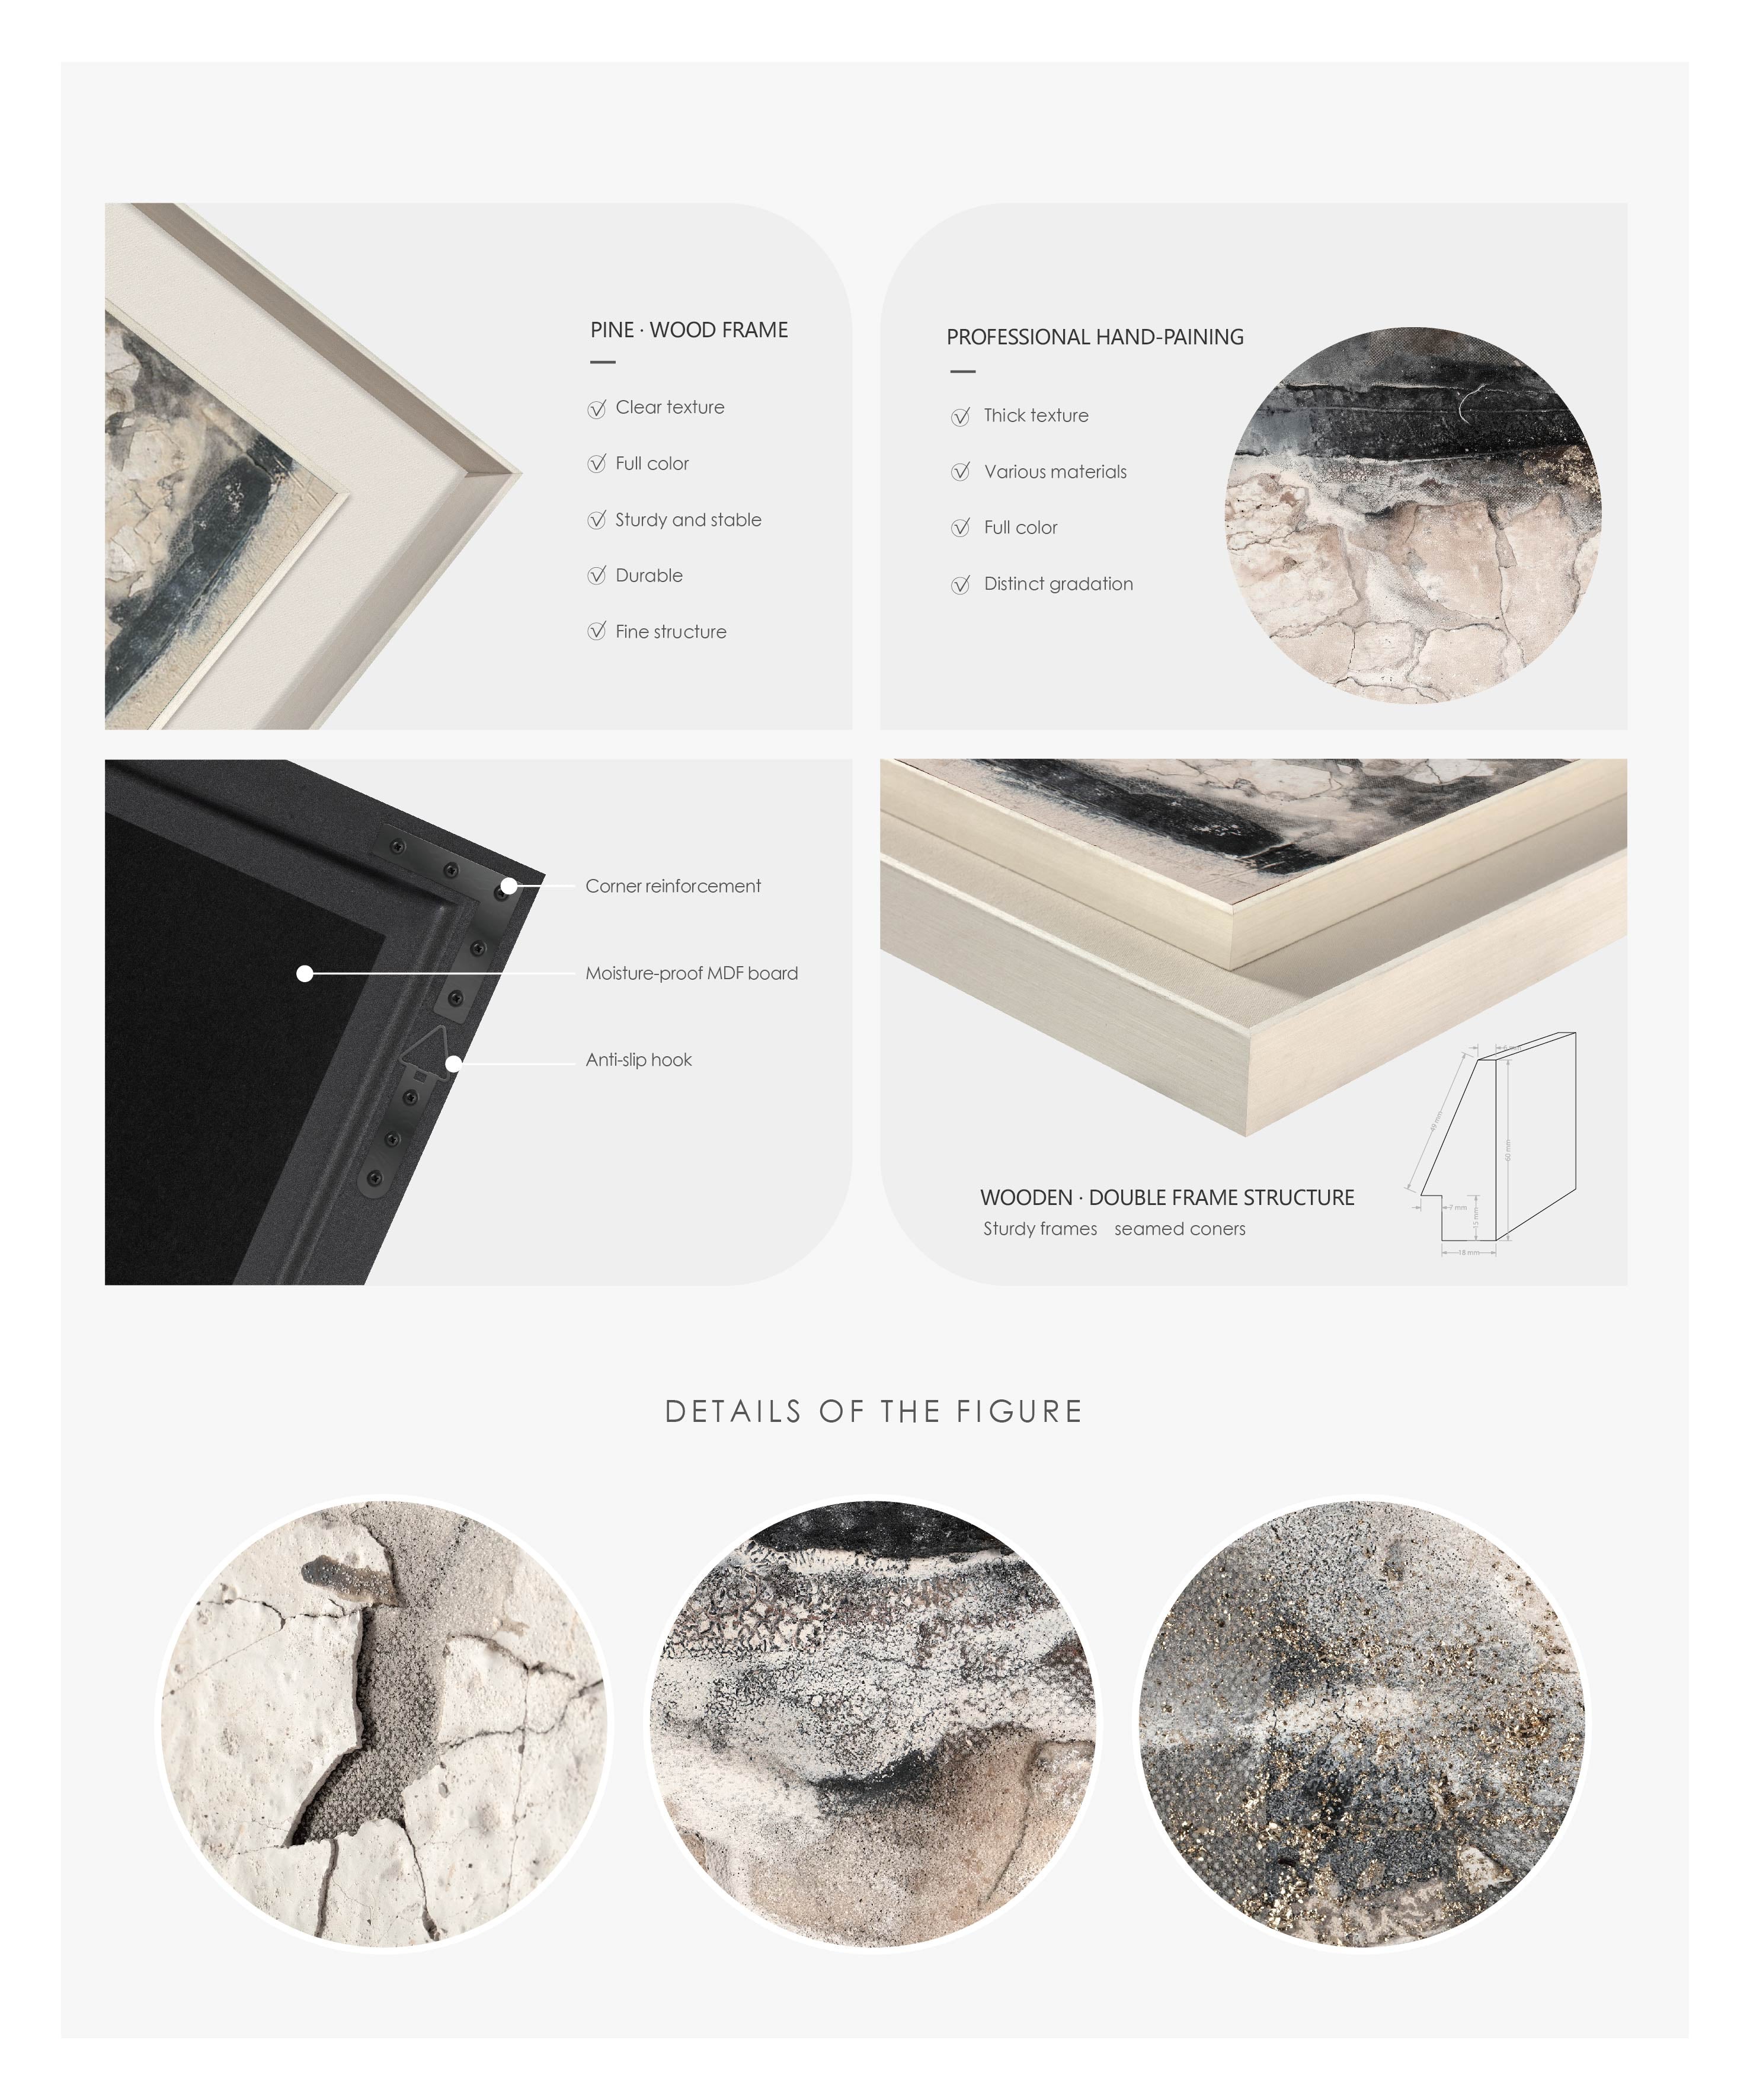 TOPLINK-Comprehensive Material - Abstract  art